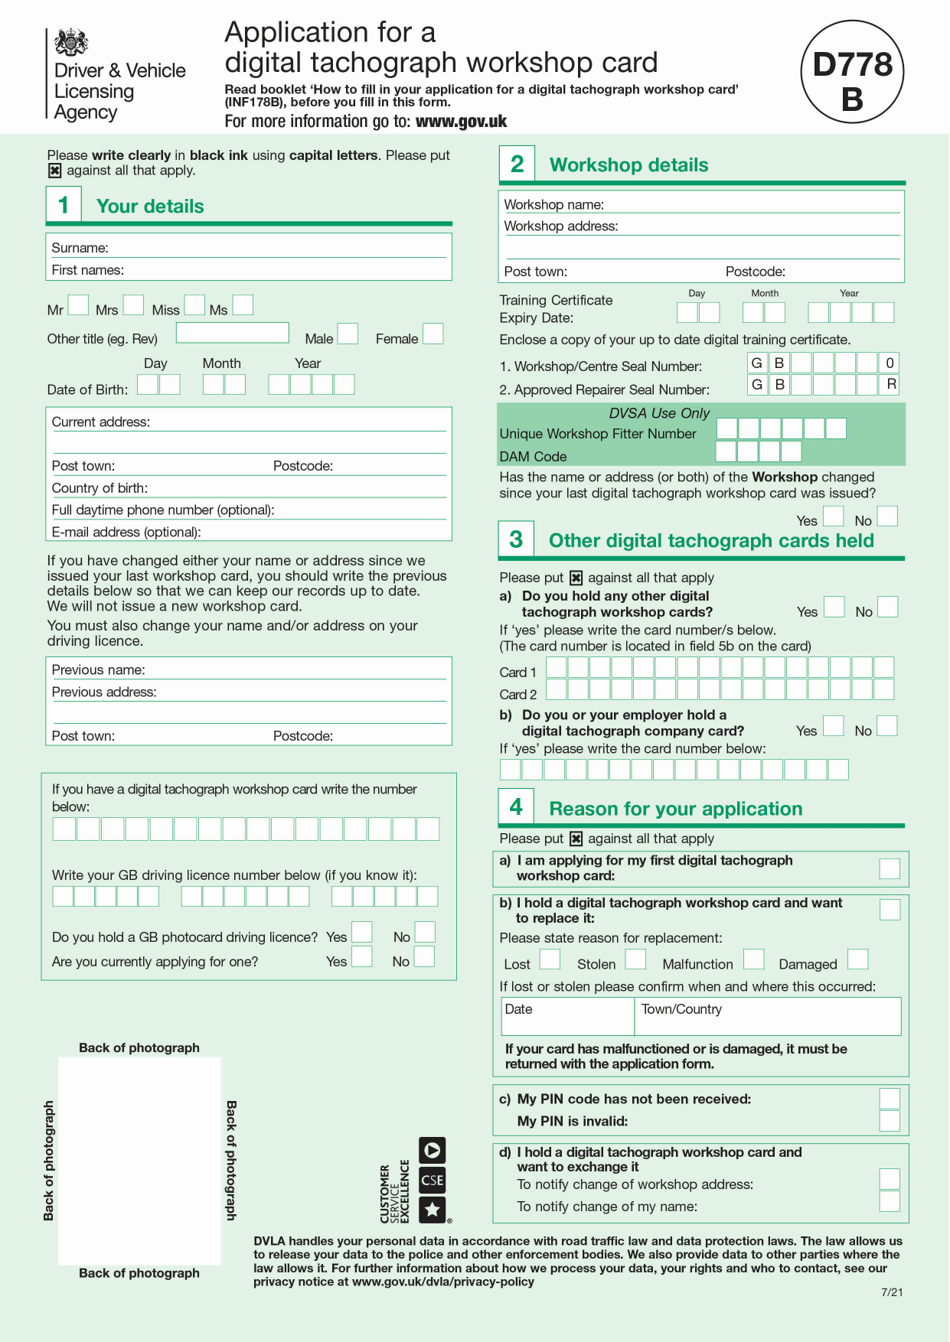 Form D778B Application for a Digital Tachograph Workshop Card - United Kingdom, Page 1